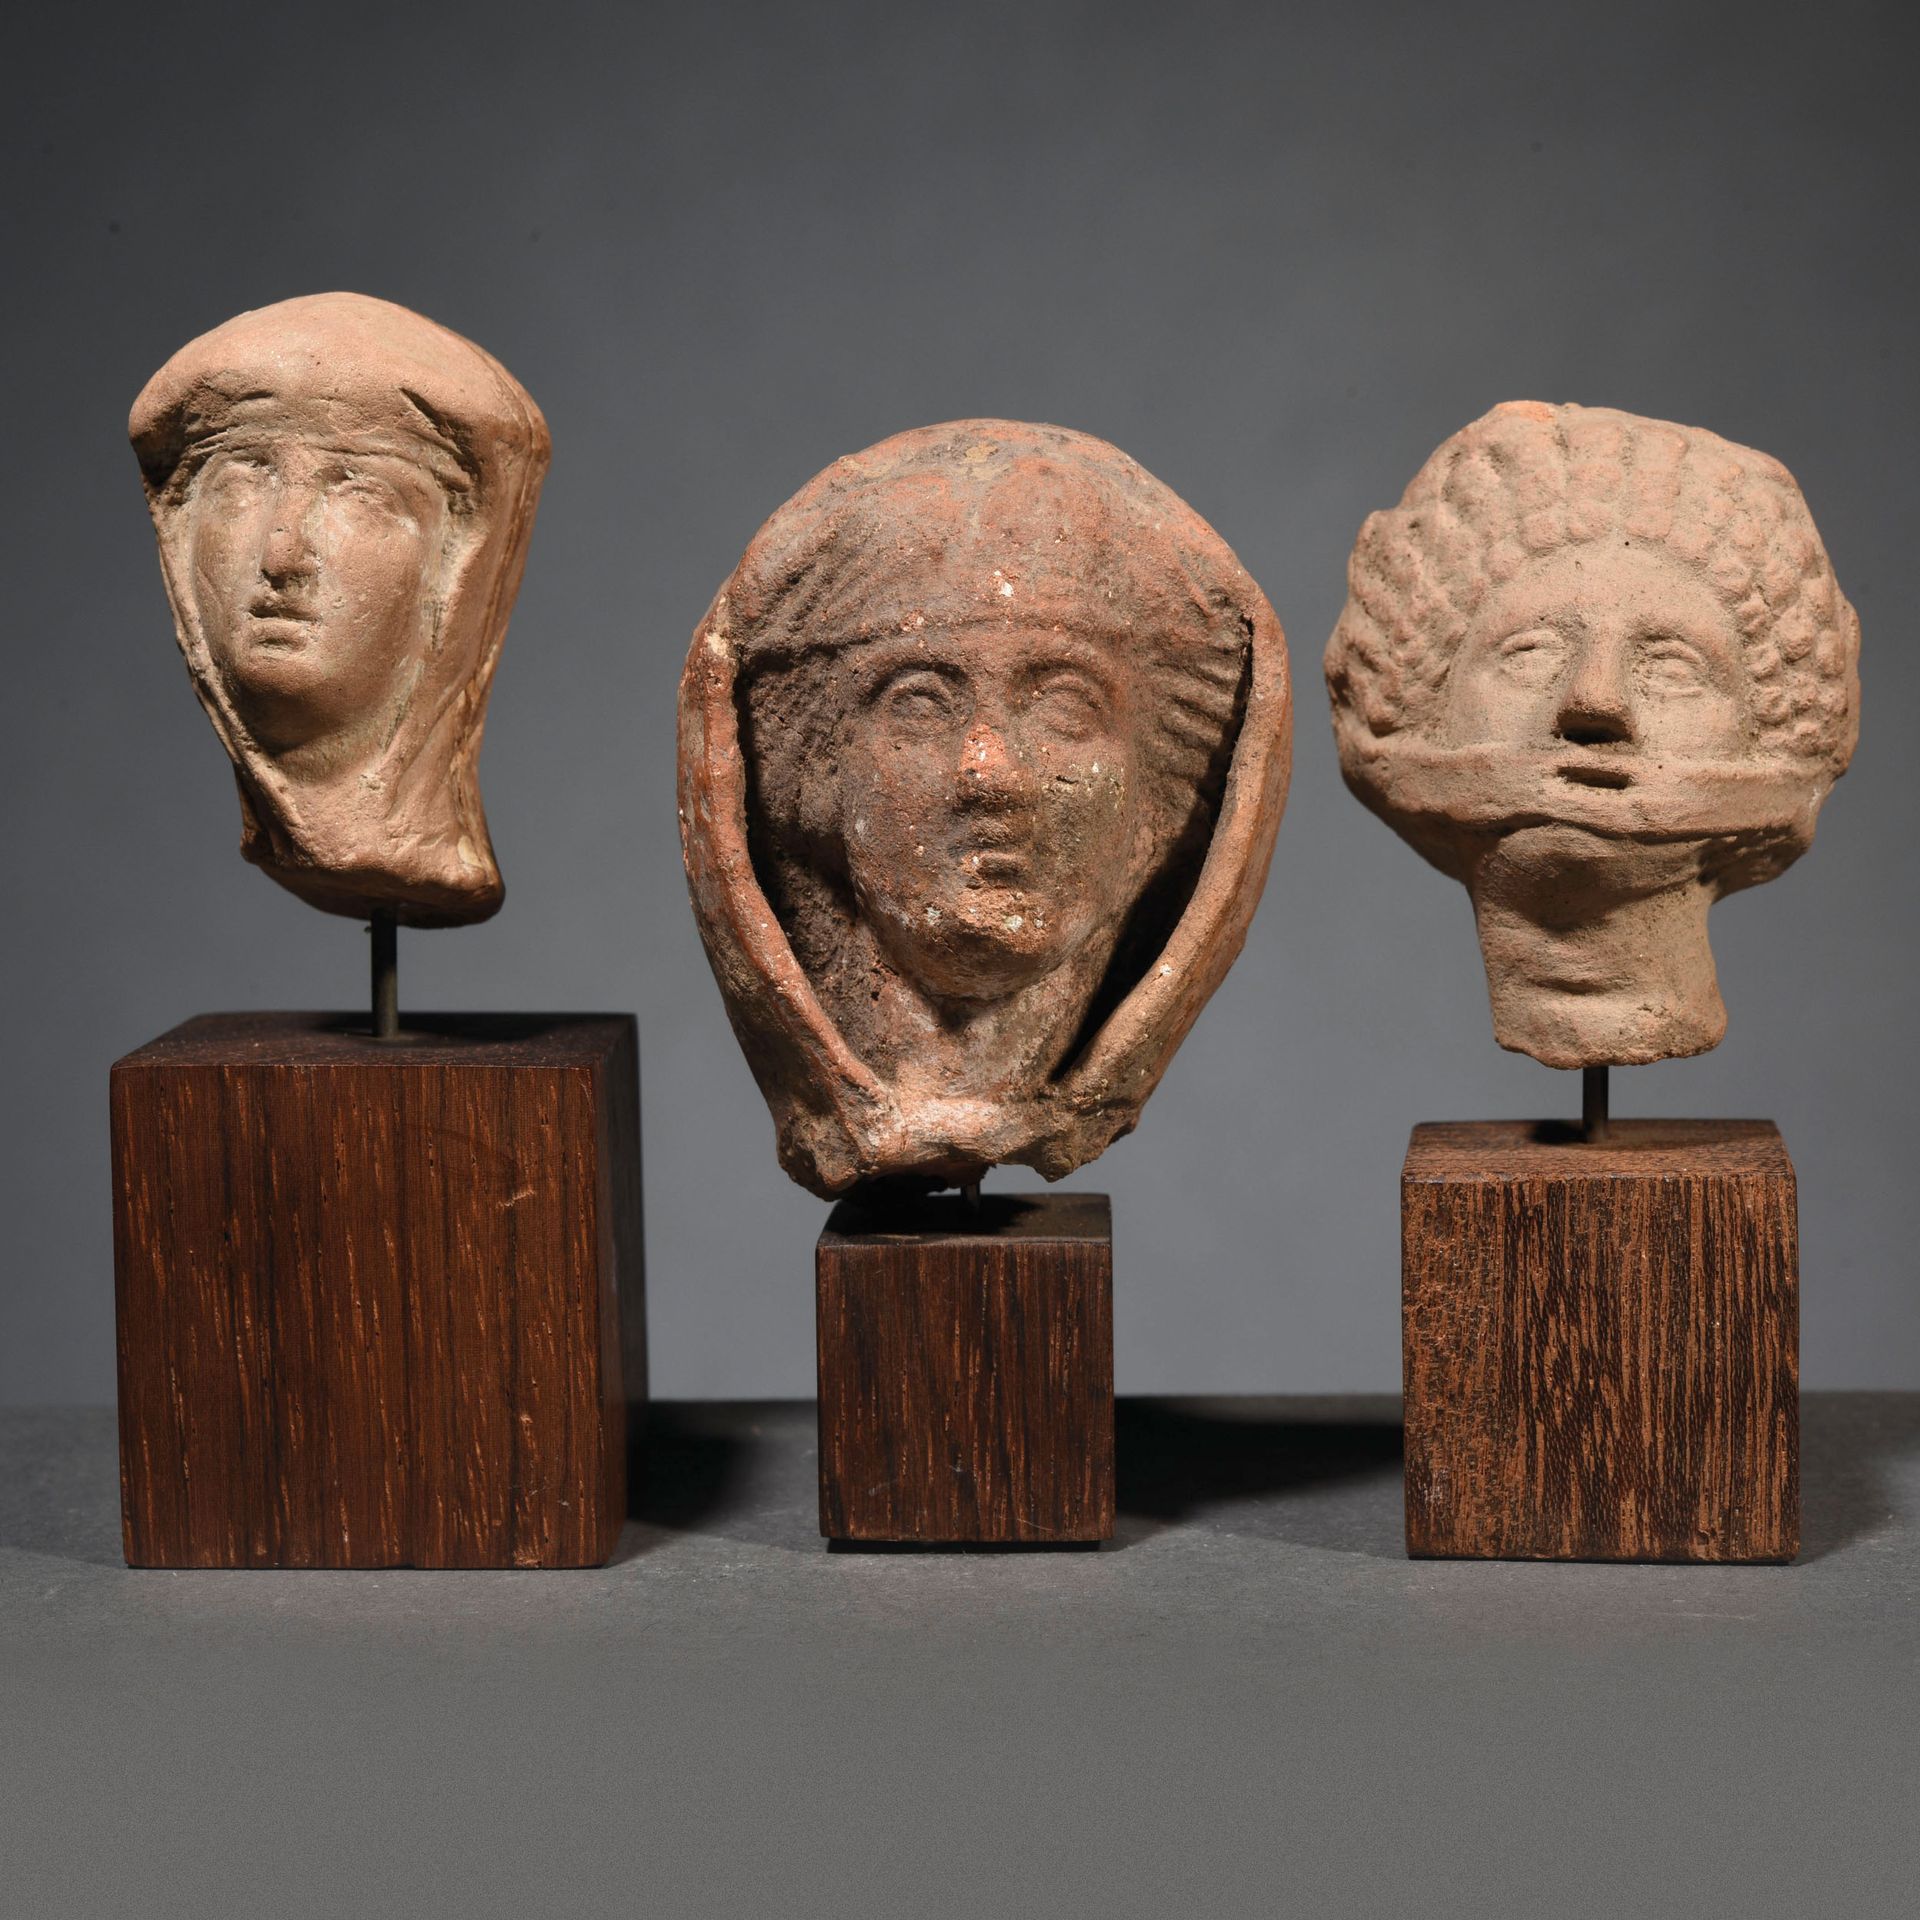 Null 一套3个面纱头

希腊化的艺术

在陶土中



出处

前L先生的收藏，1980年代。



一组3个带面纱的希腊化陶土头像。